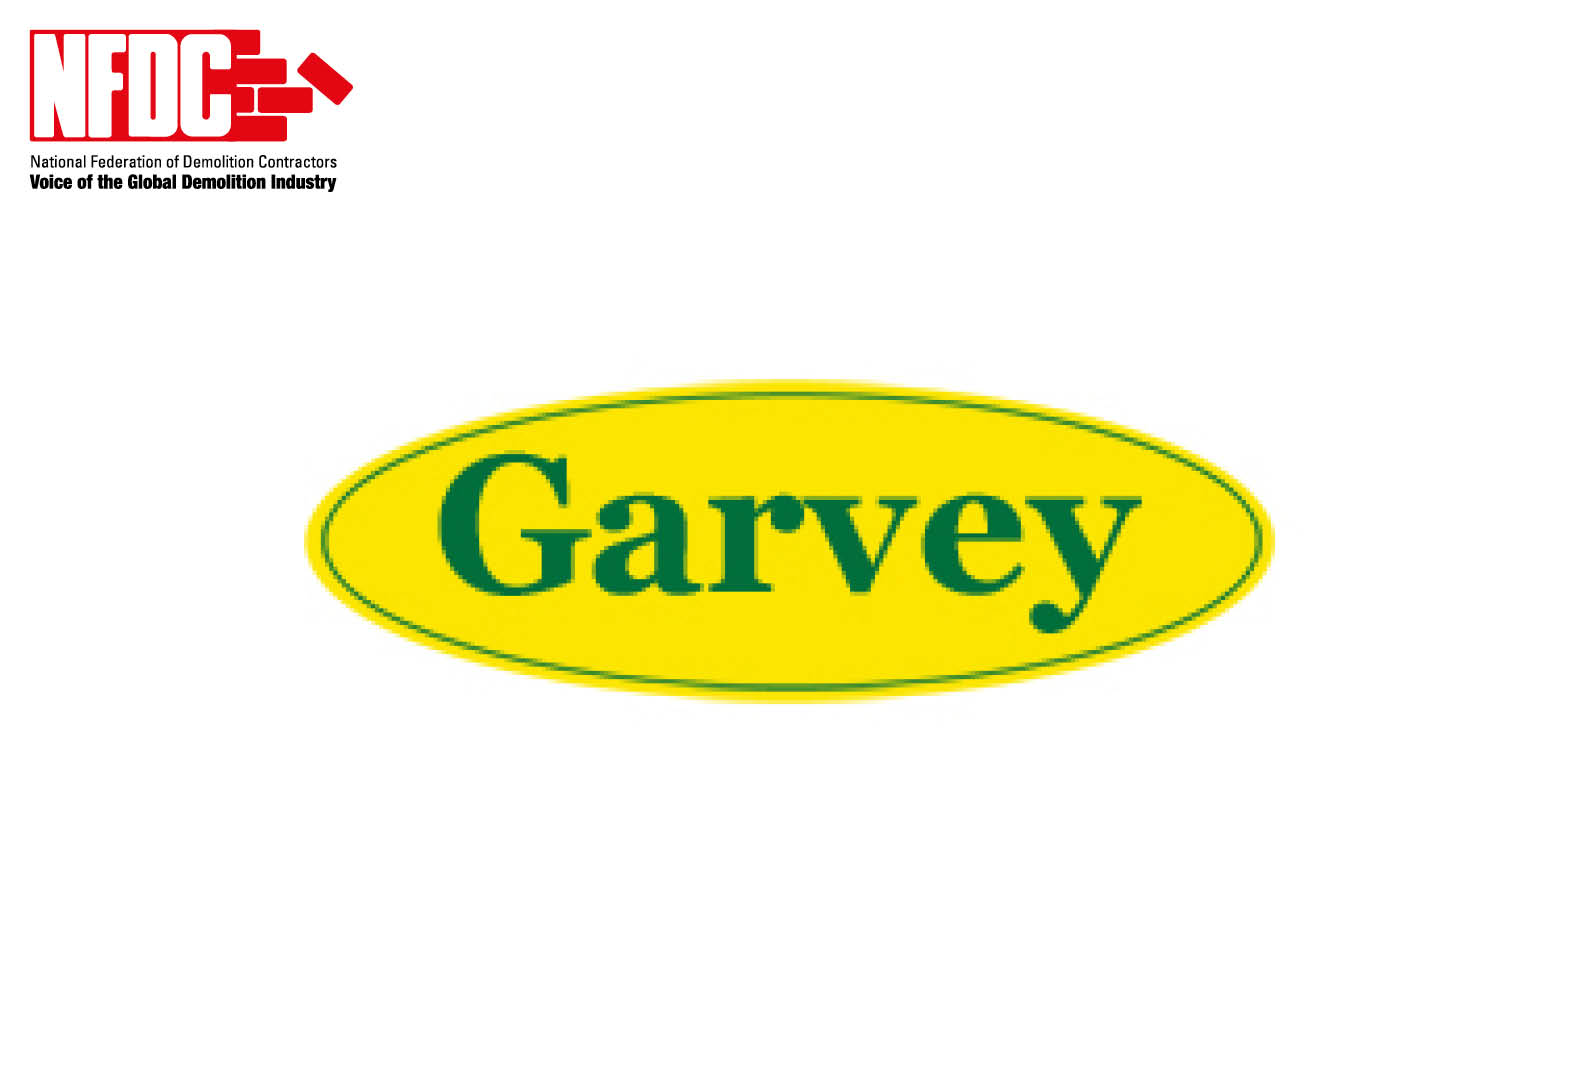 Garvey Demolition Ltd